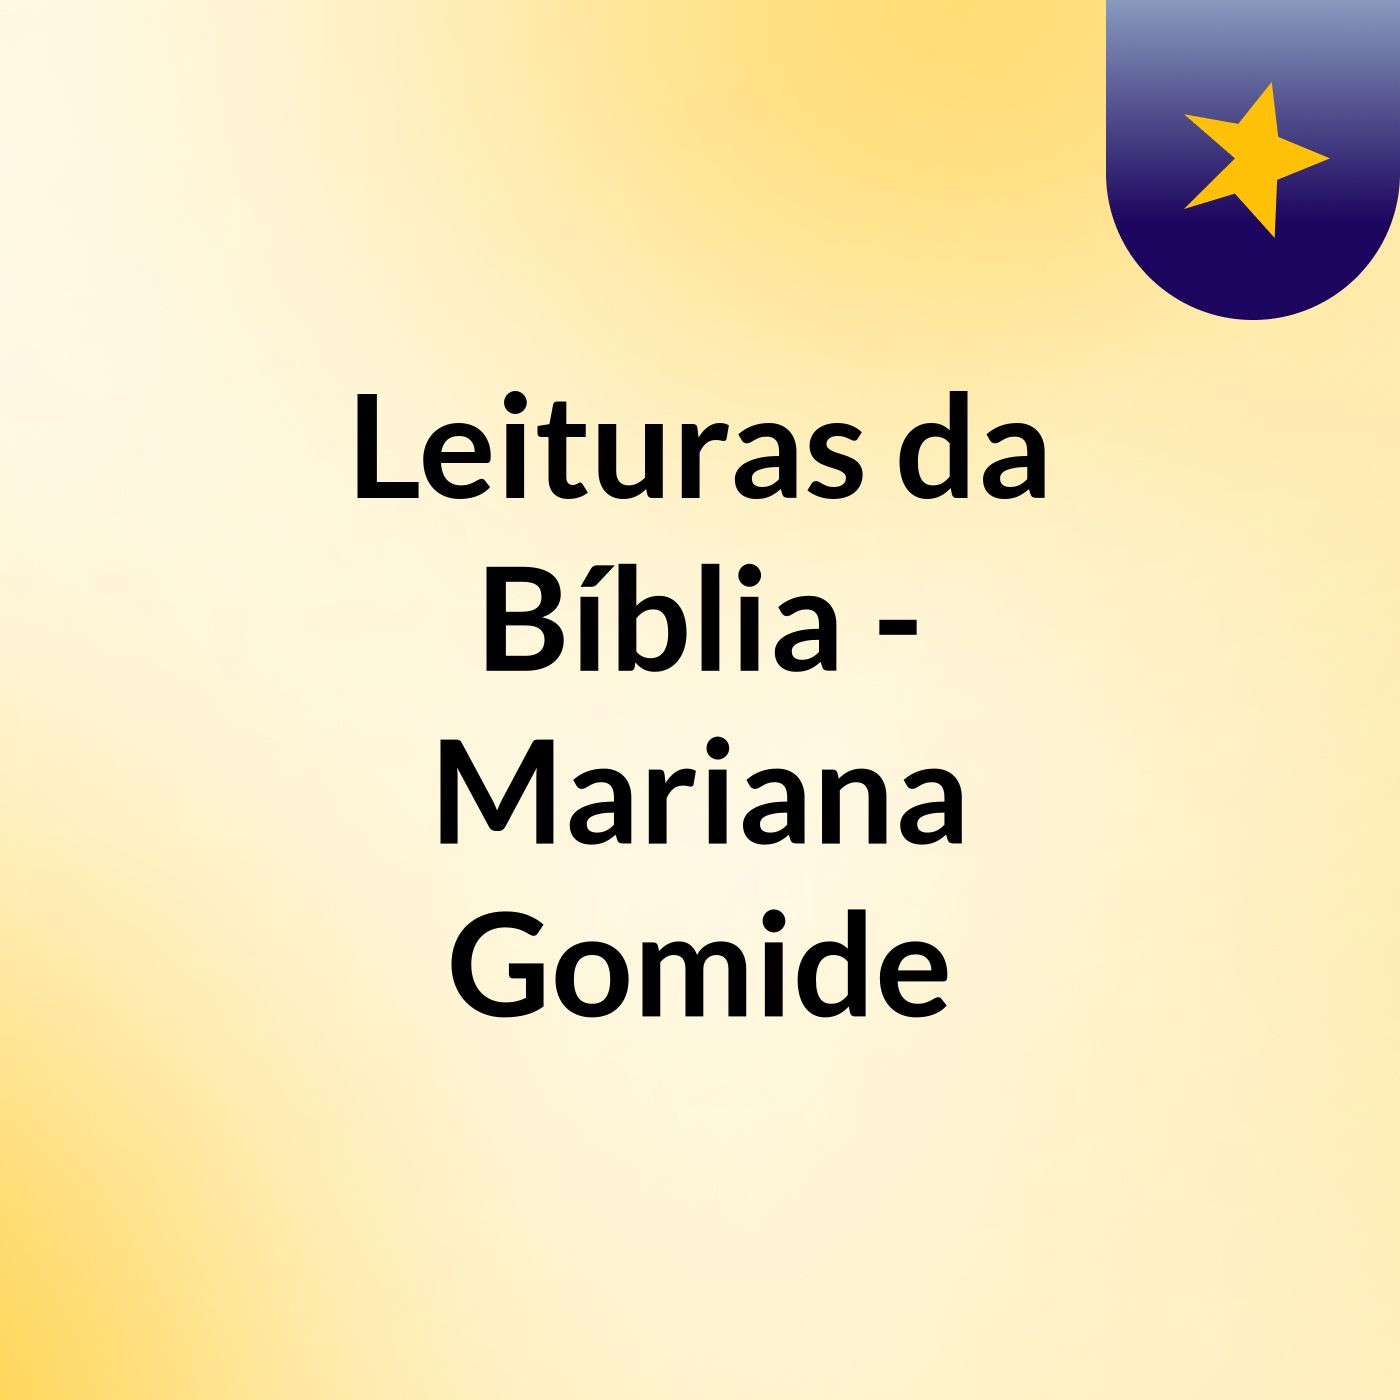 Leituras da Bíblia - Mariana Gomide